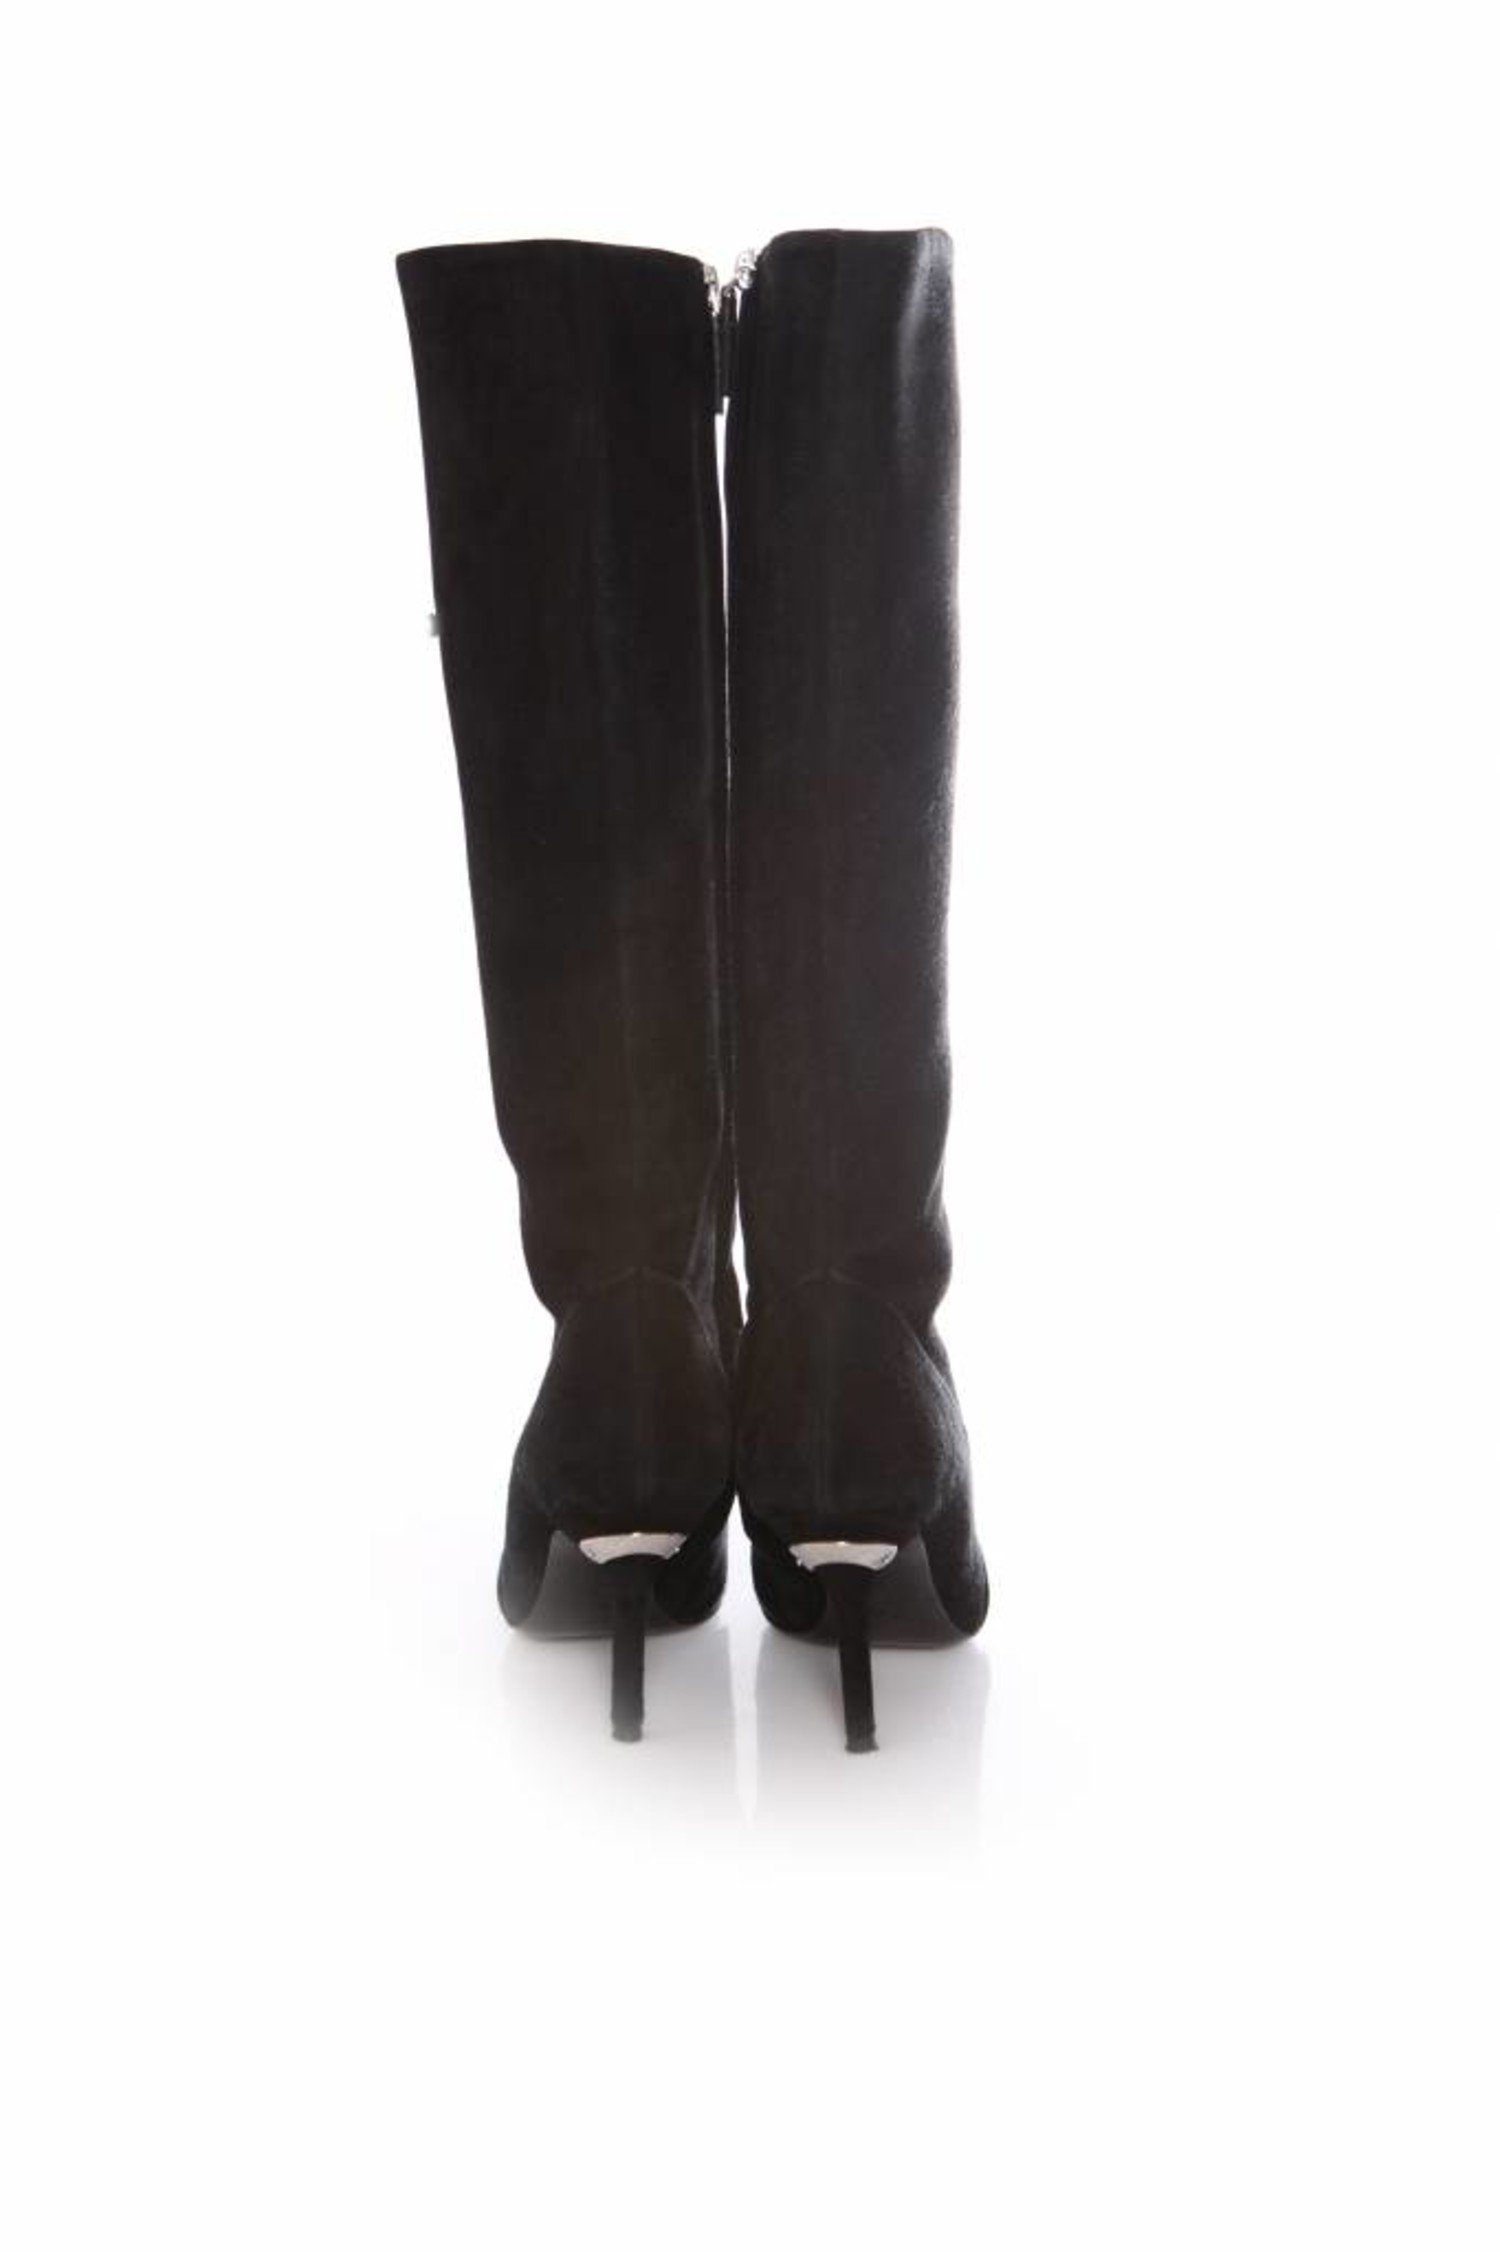 Boots Louis Vuitton Black size 38.5 EU in Suede - 32734291